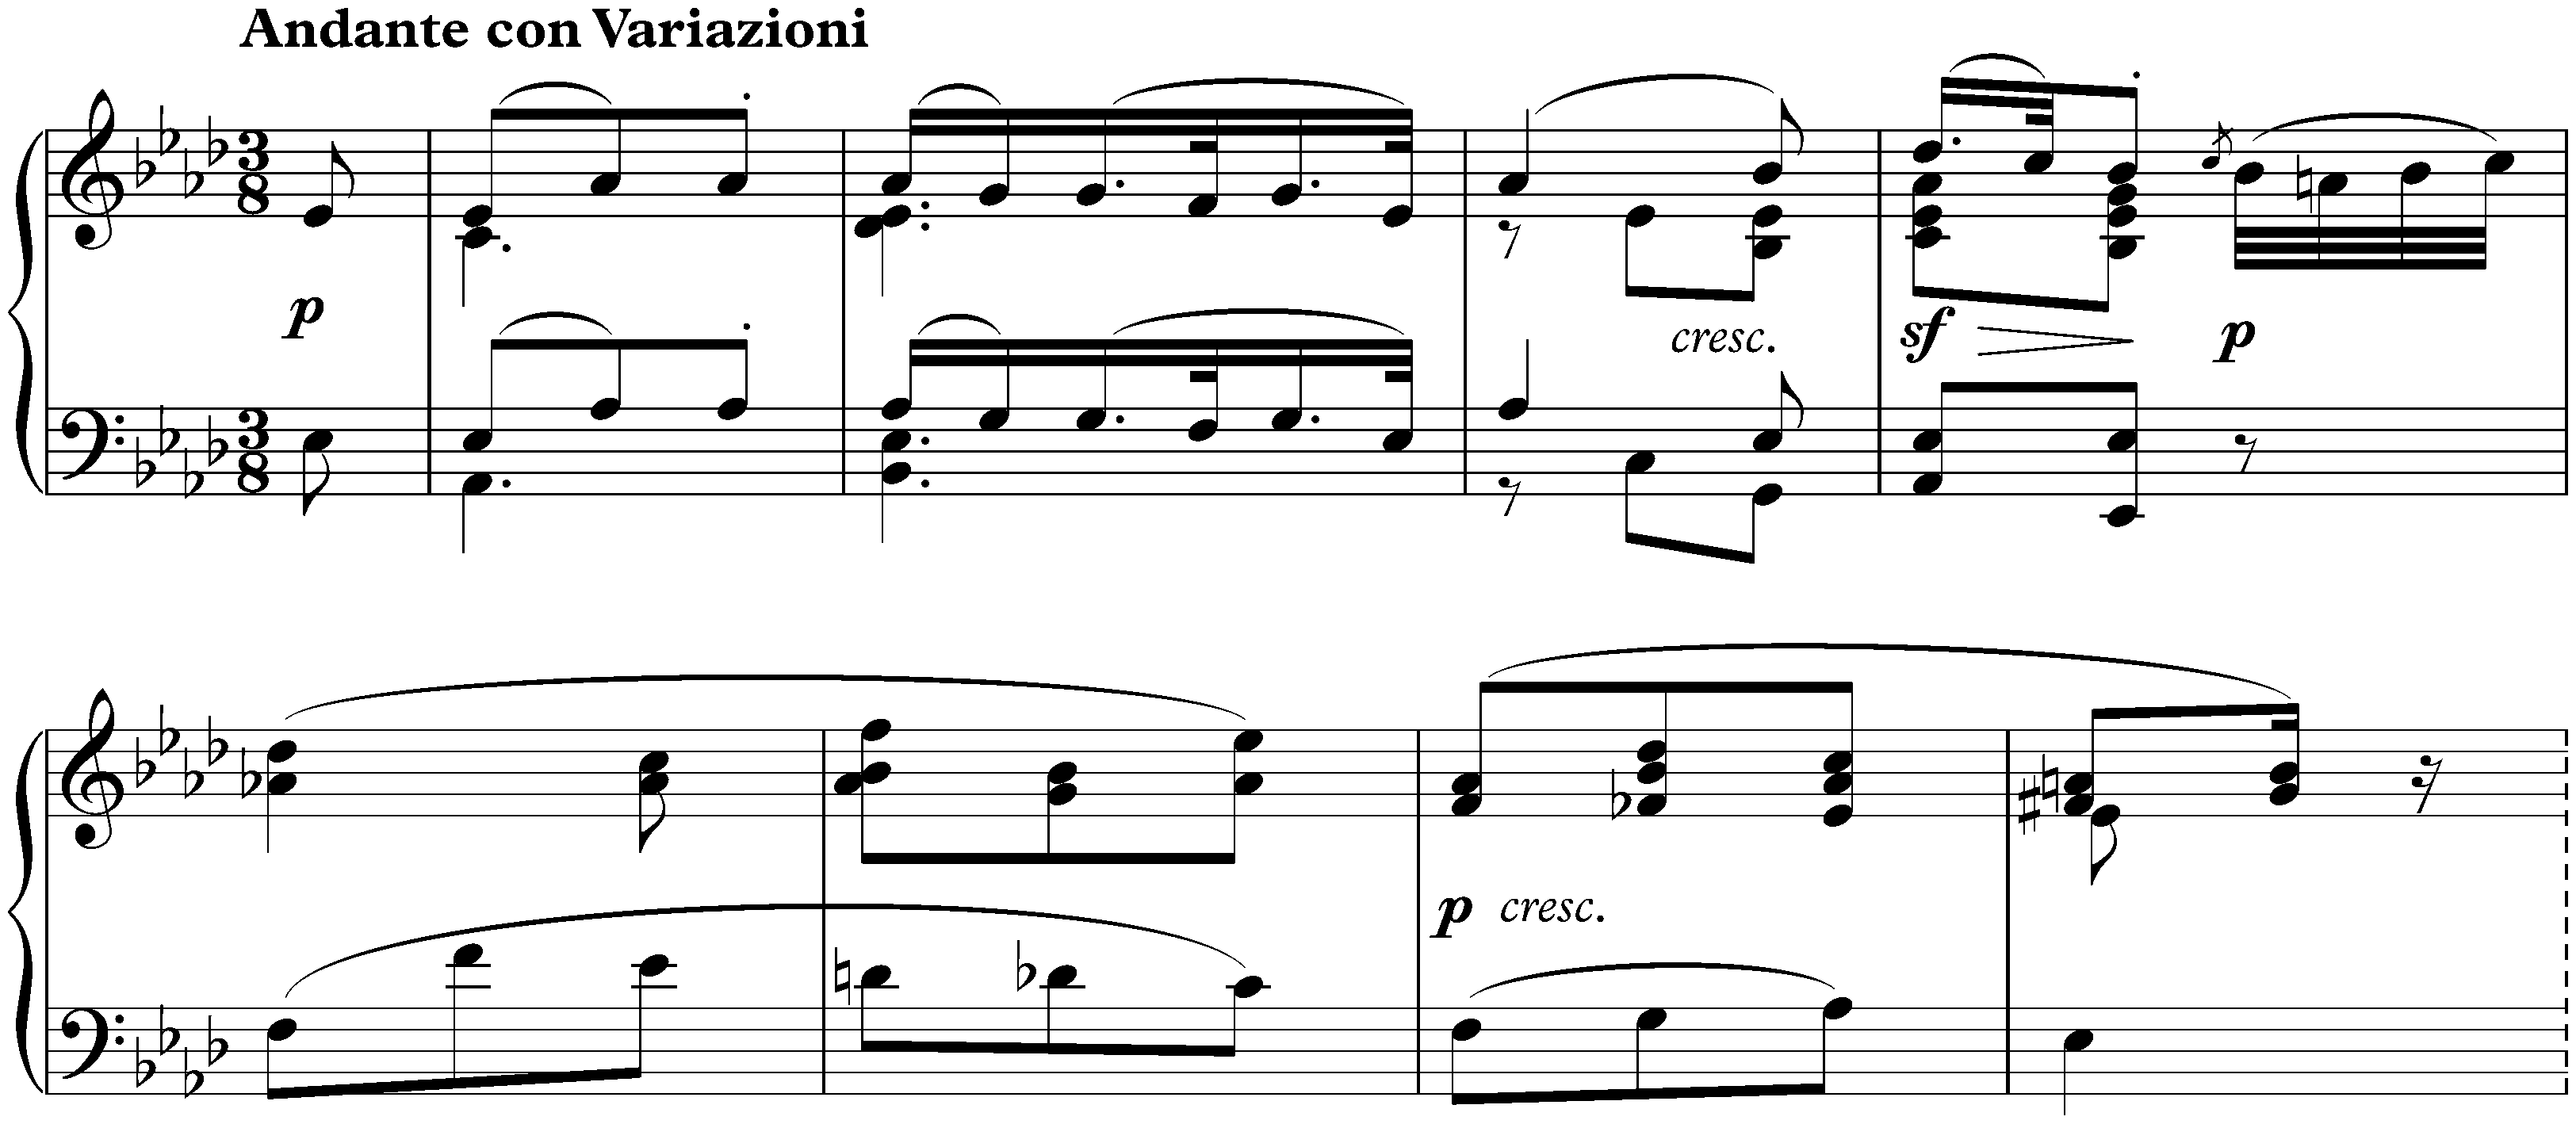 Sonata no. 12 in A-flat major, op. 26; 1. Andante con Variazioni